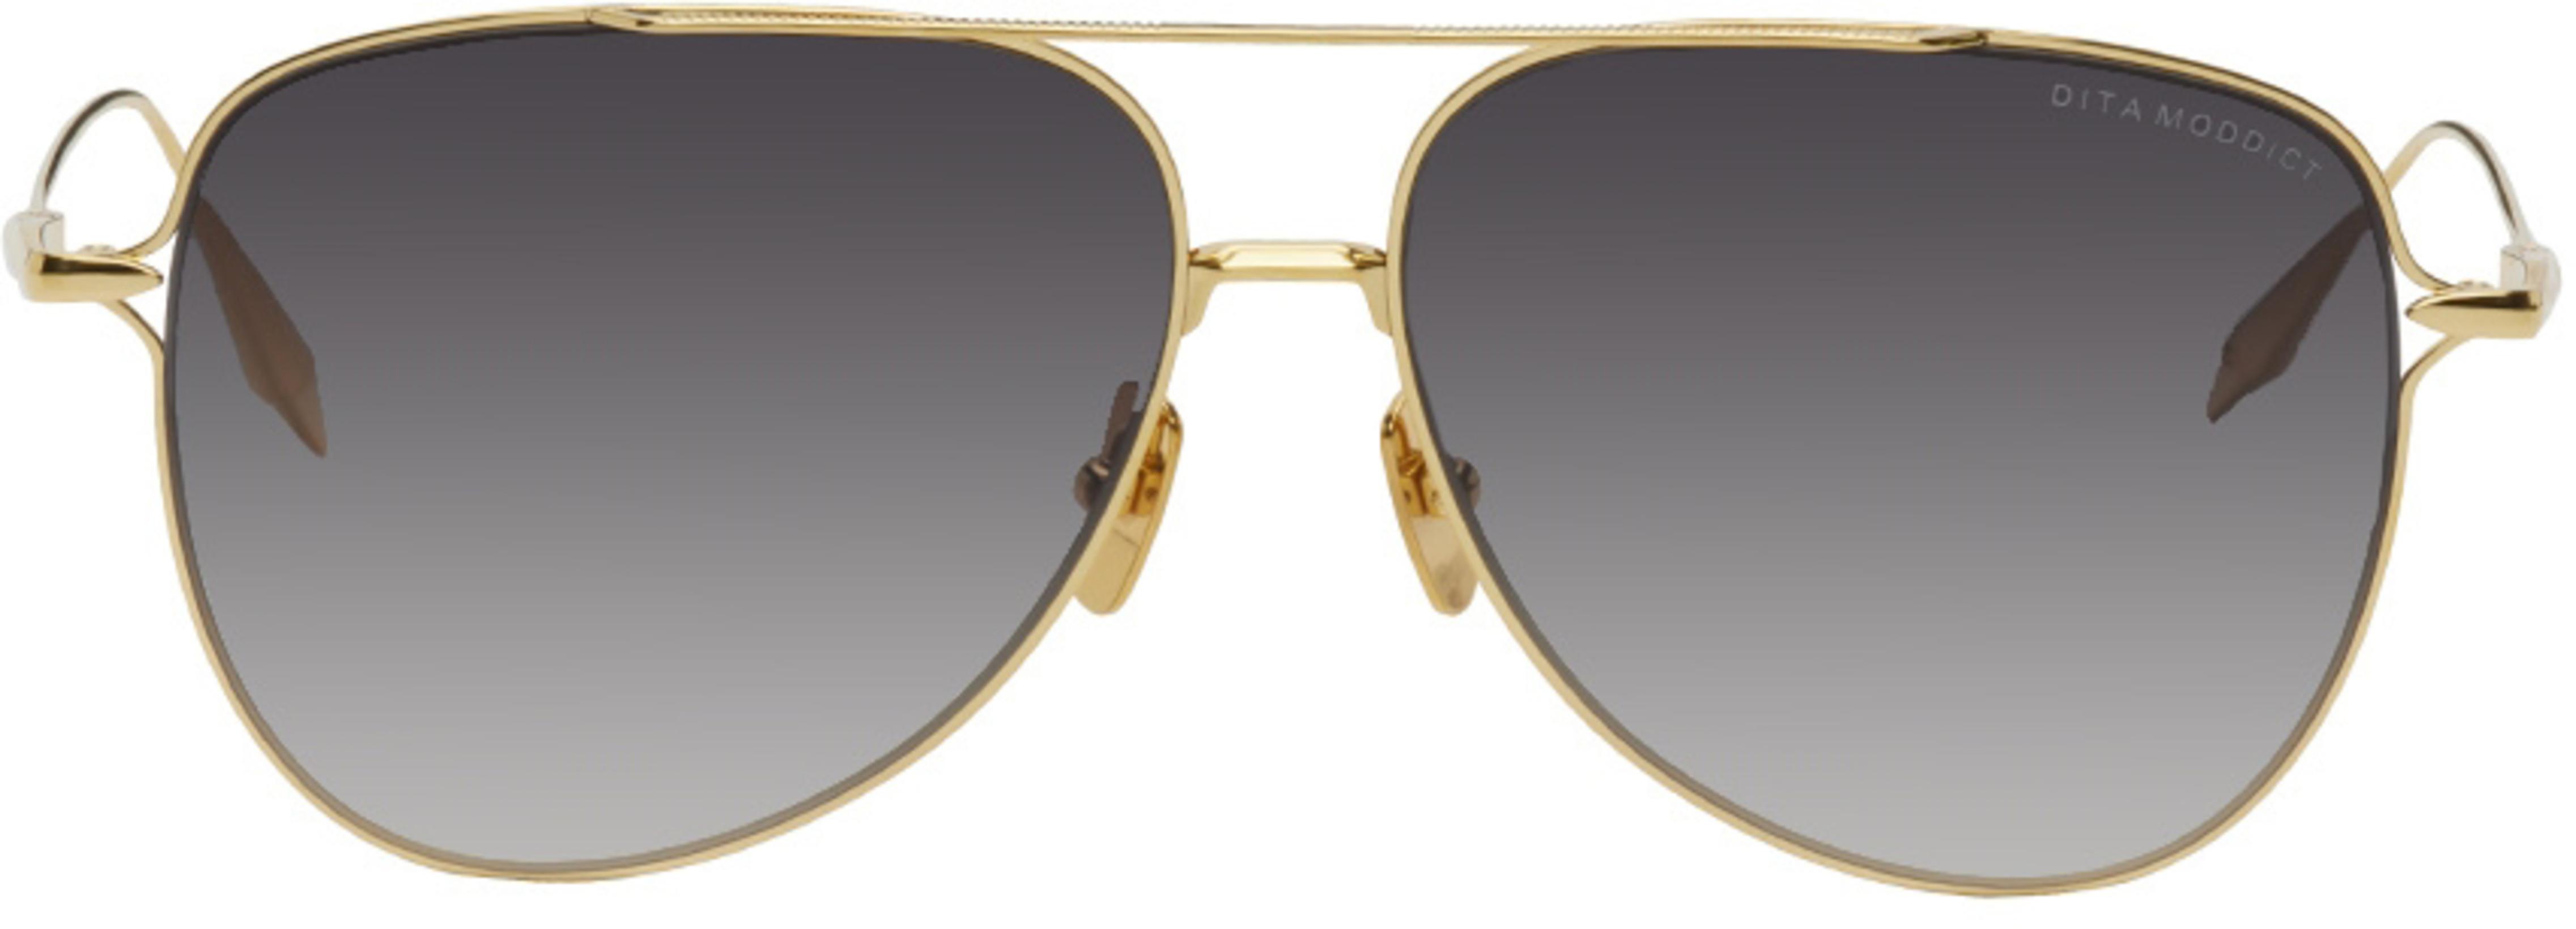 Gold Moddict Sunglasses by DITA